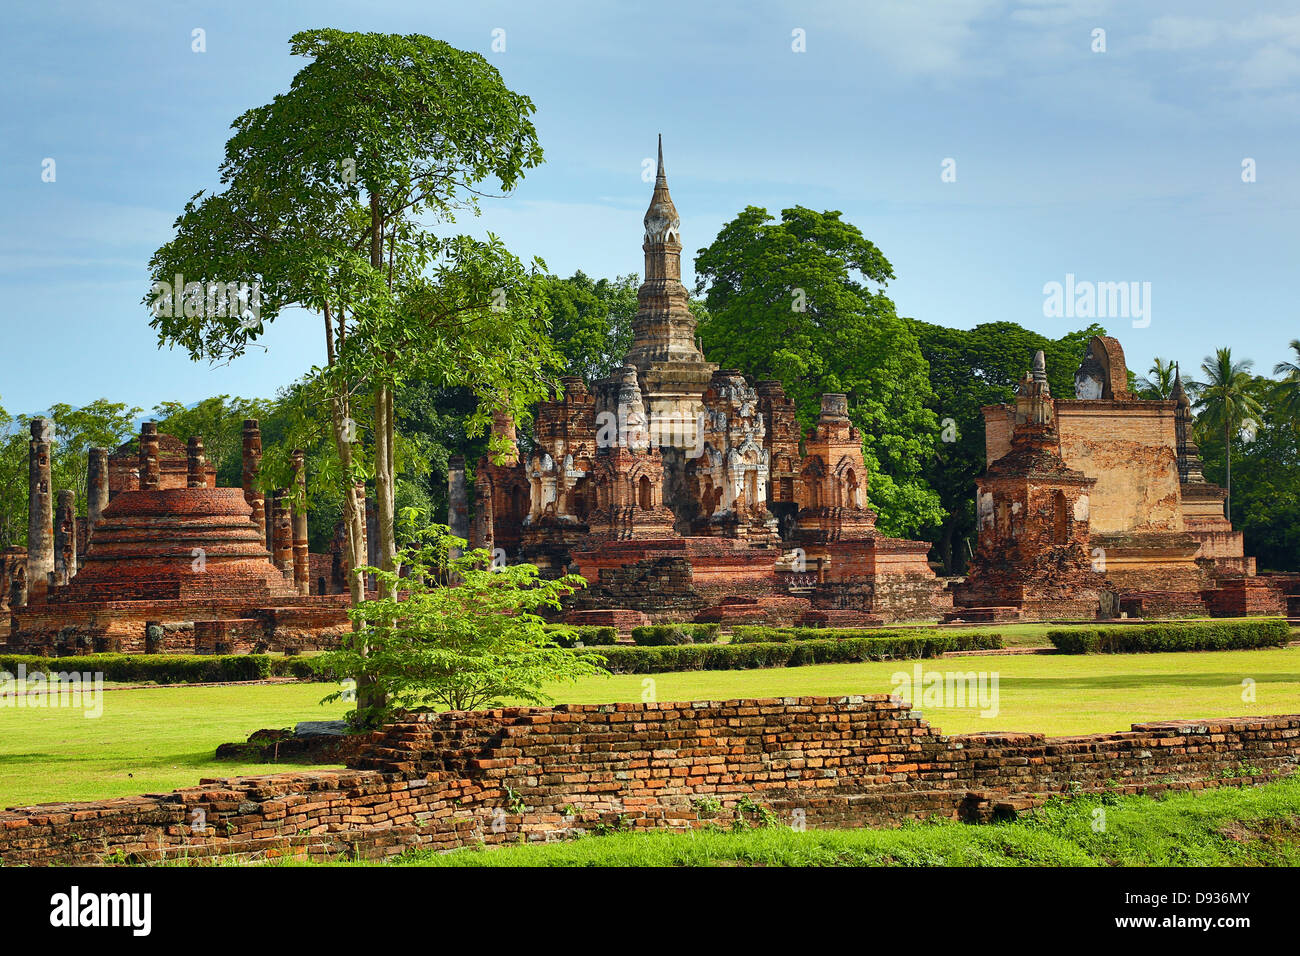 Wat Mahathat temple, Sukhotai Historical Park, Sukhotai, Thailand Stock Photo